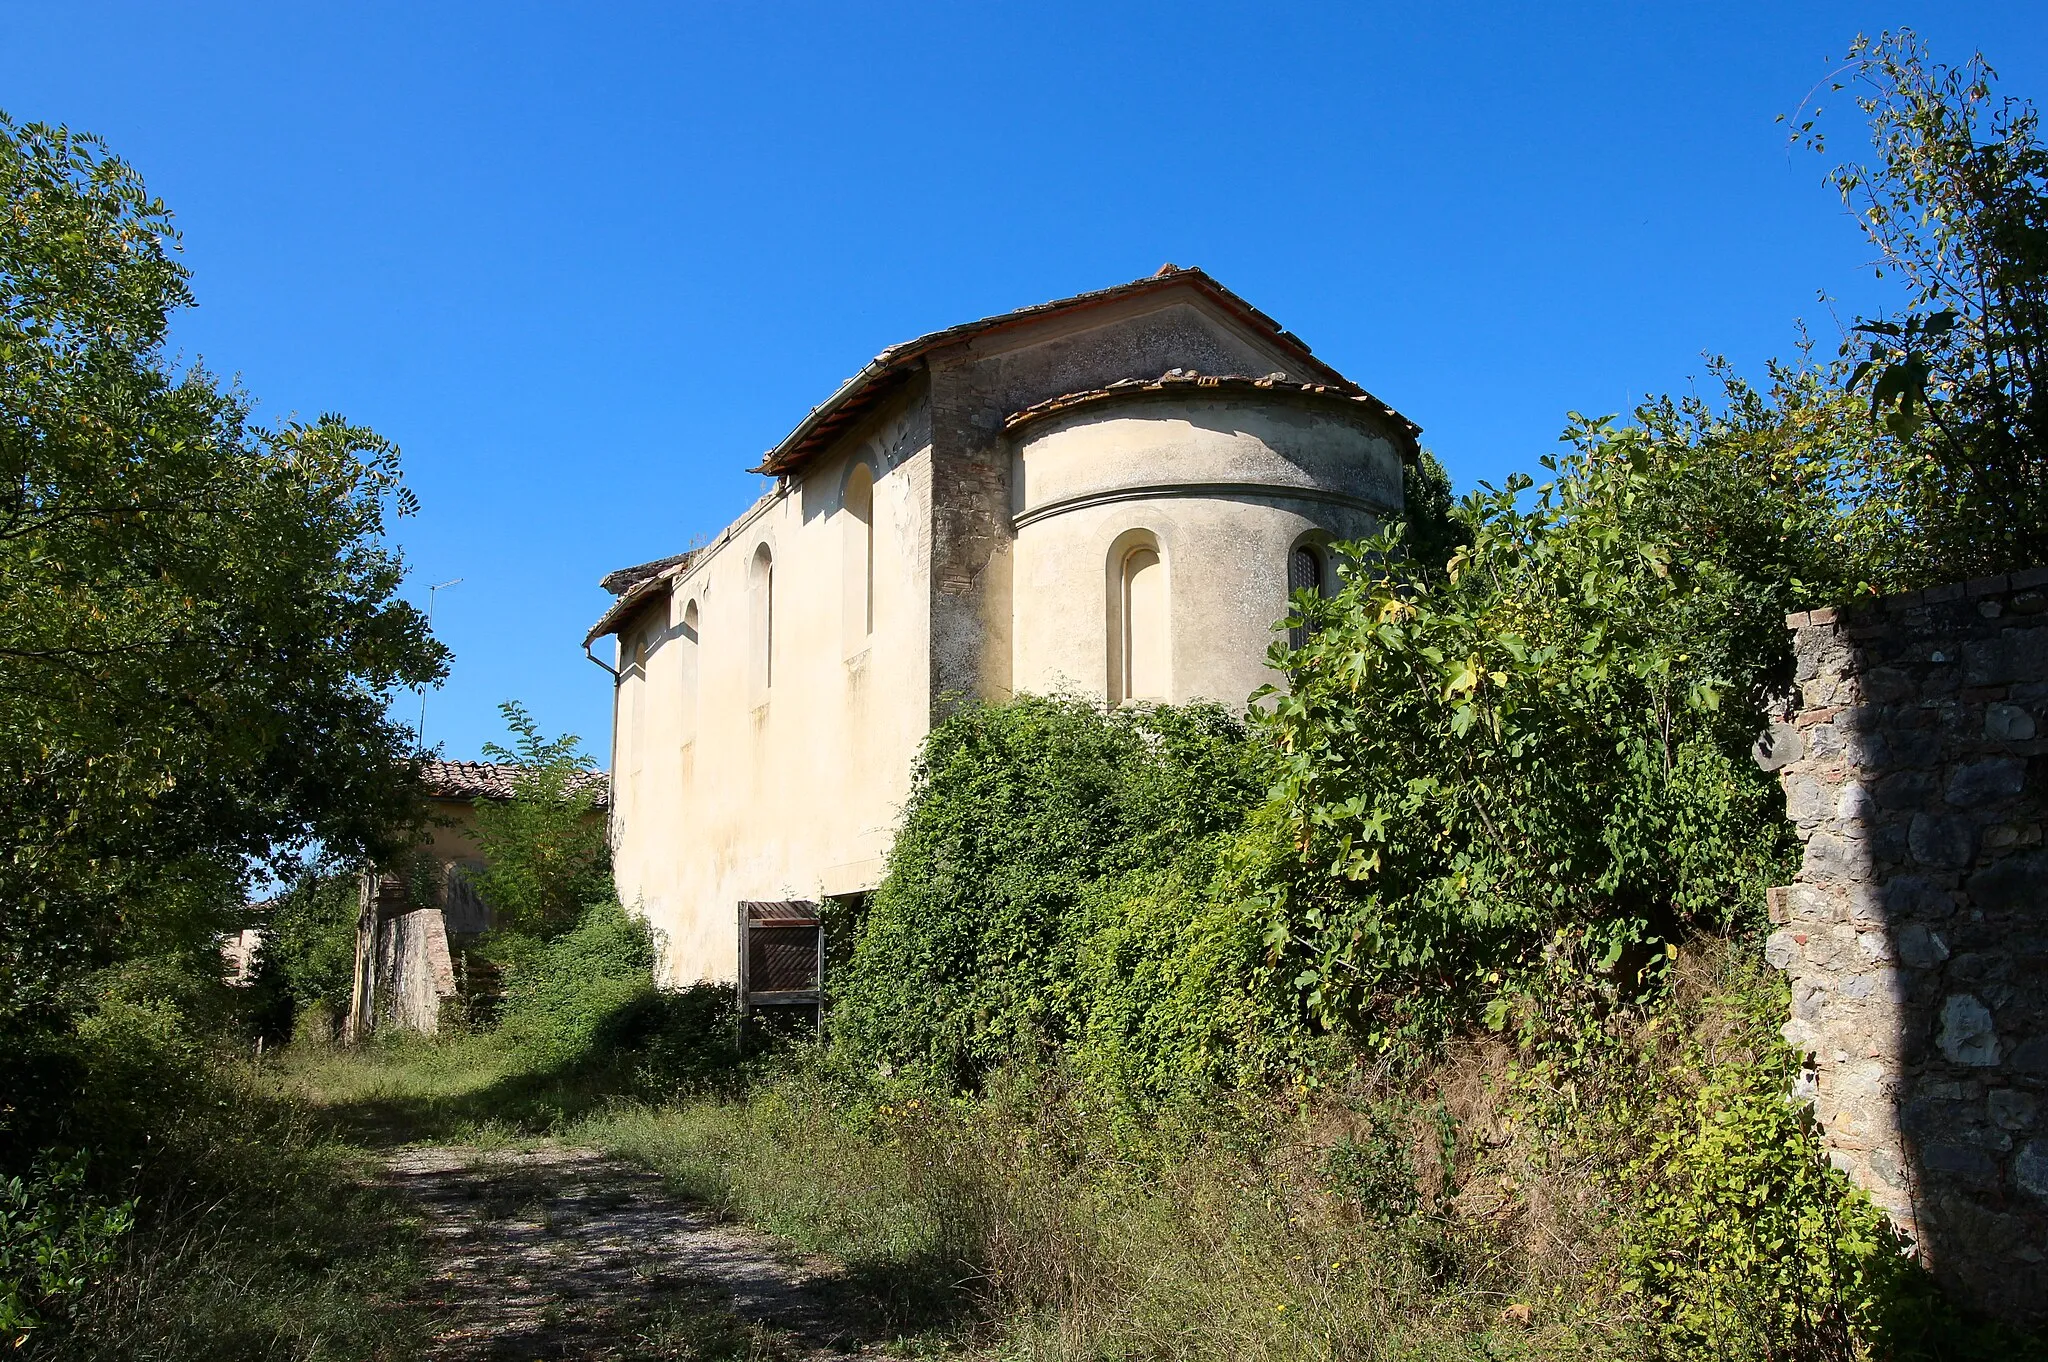 Photo showing: Church San Piero, in Barca, location of San Piero (hamlet of Castelnuovo Berardenga), Province of Siena, Tuscany, Italy